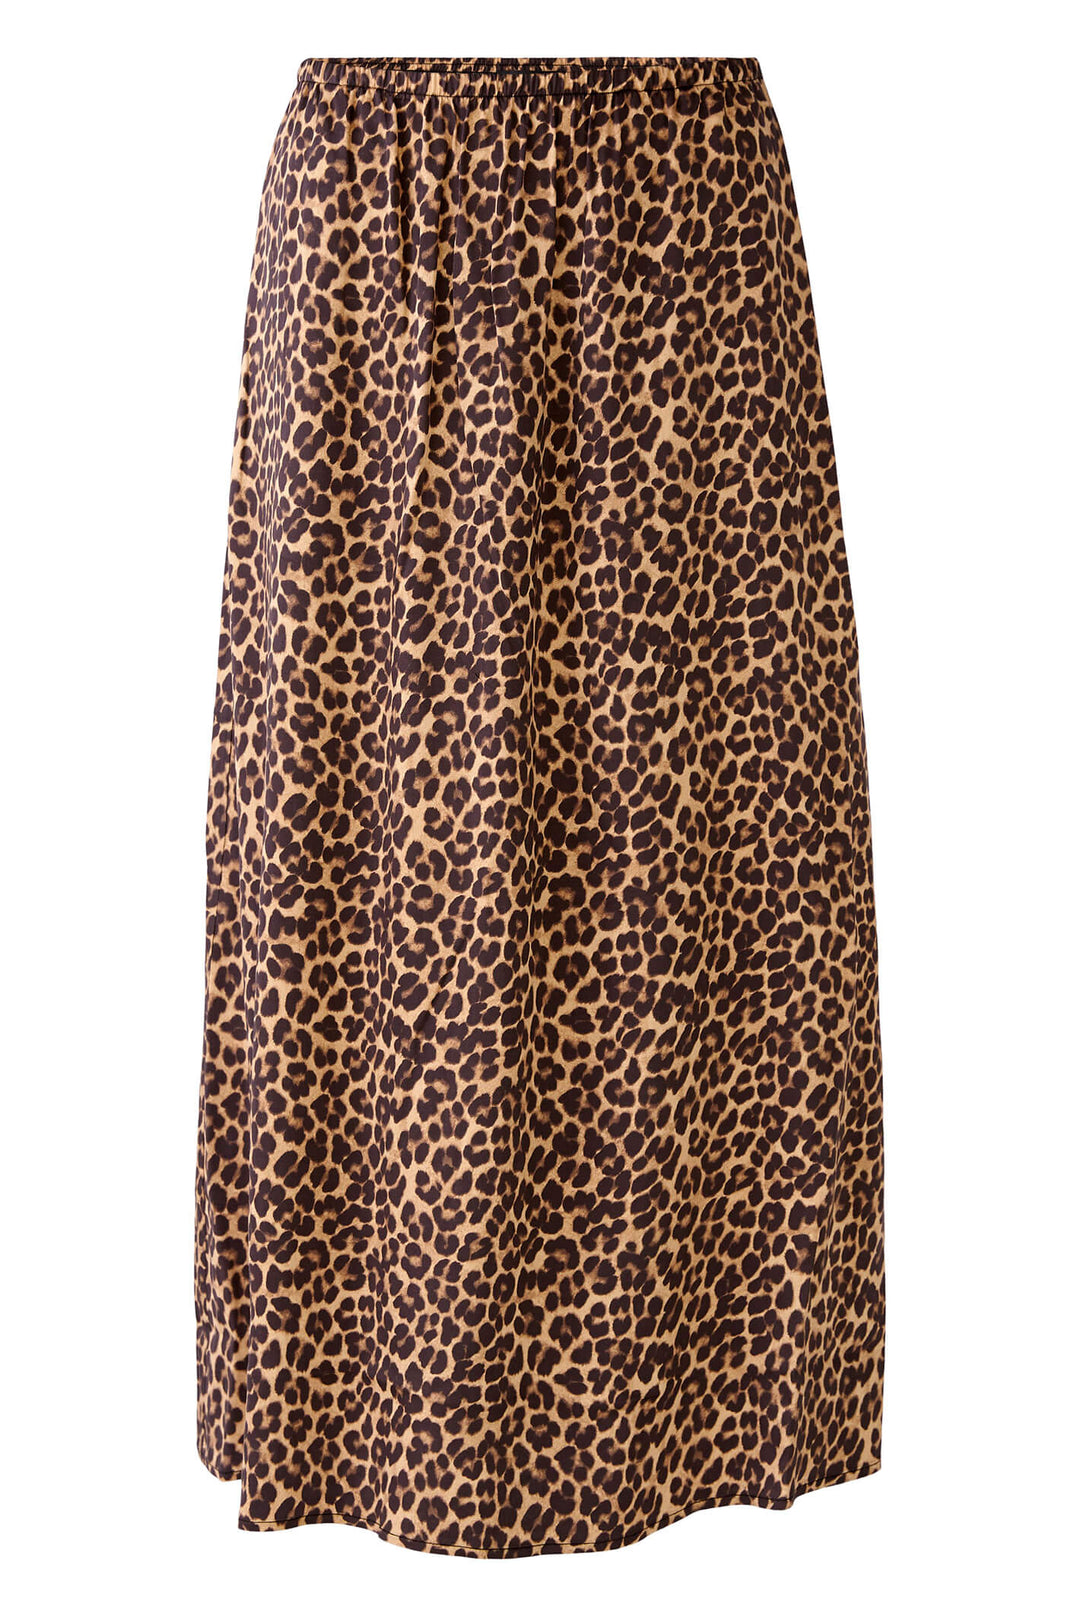 Oui 79760 Rock Black Camel Animal Print Skirt - Olivia Grace Fashion